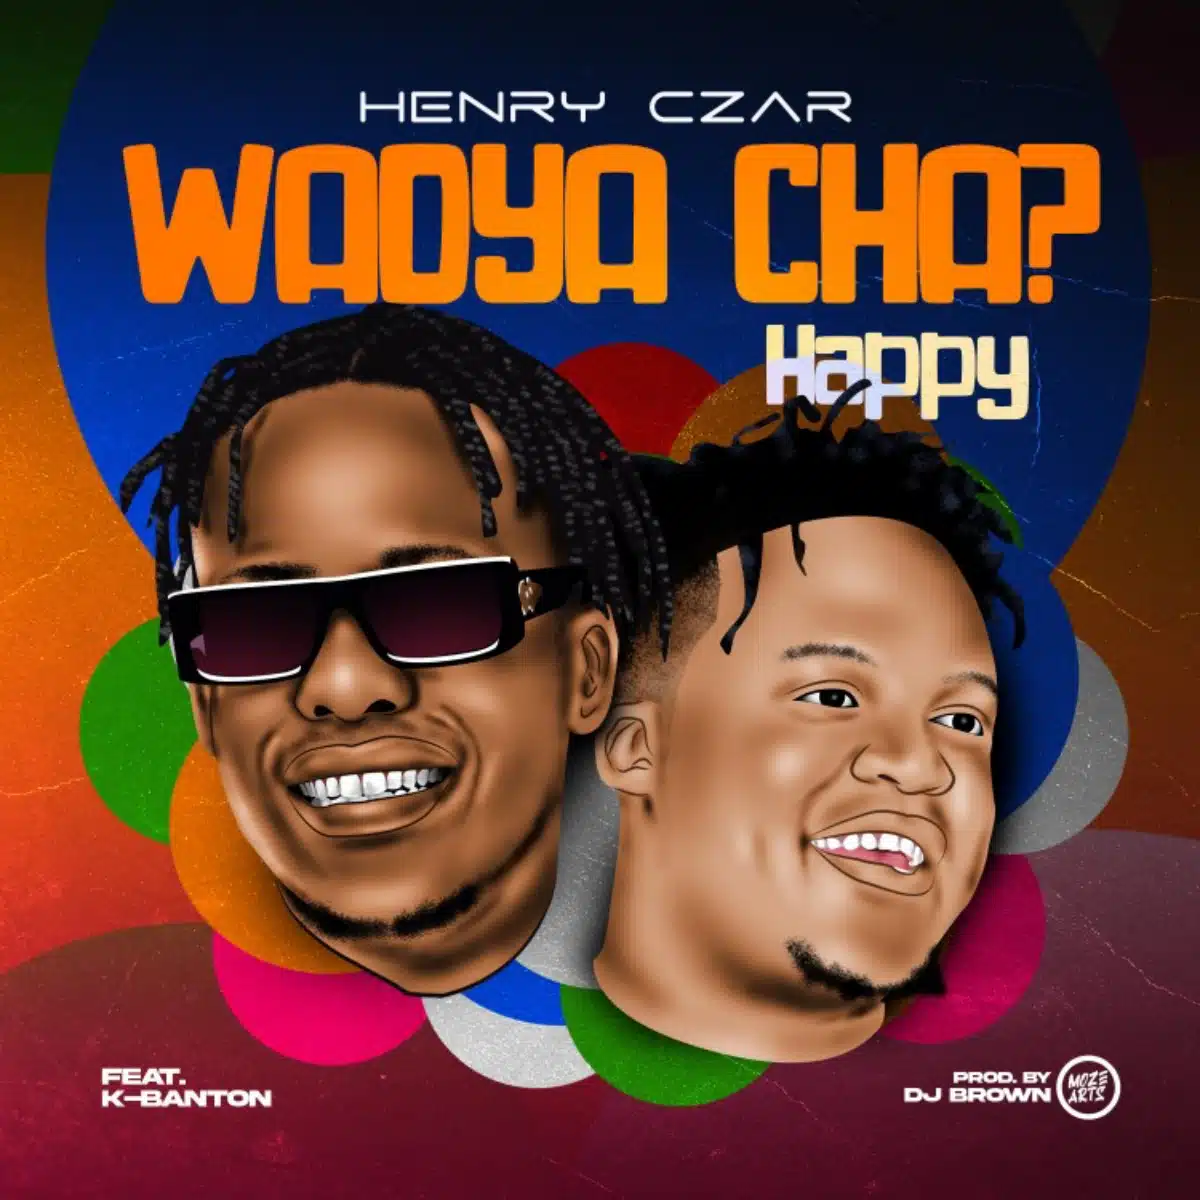 DOWNLOAD: Henry Czar Ft K Banton – “Wadya Cha?” (Happy) Mp3